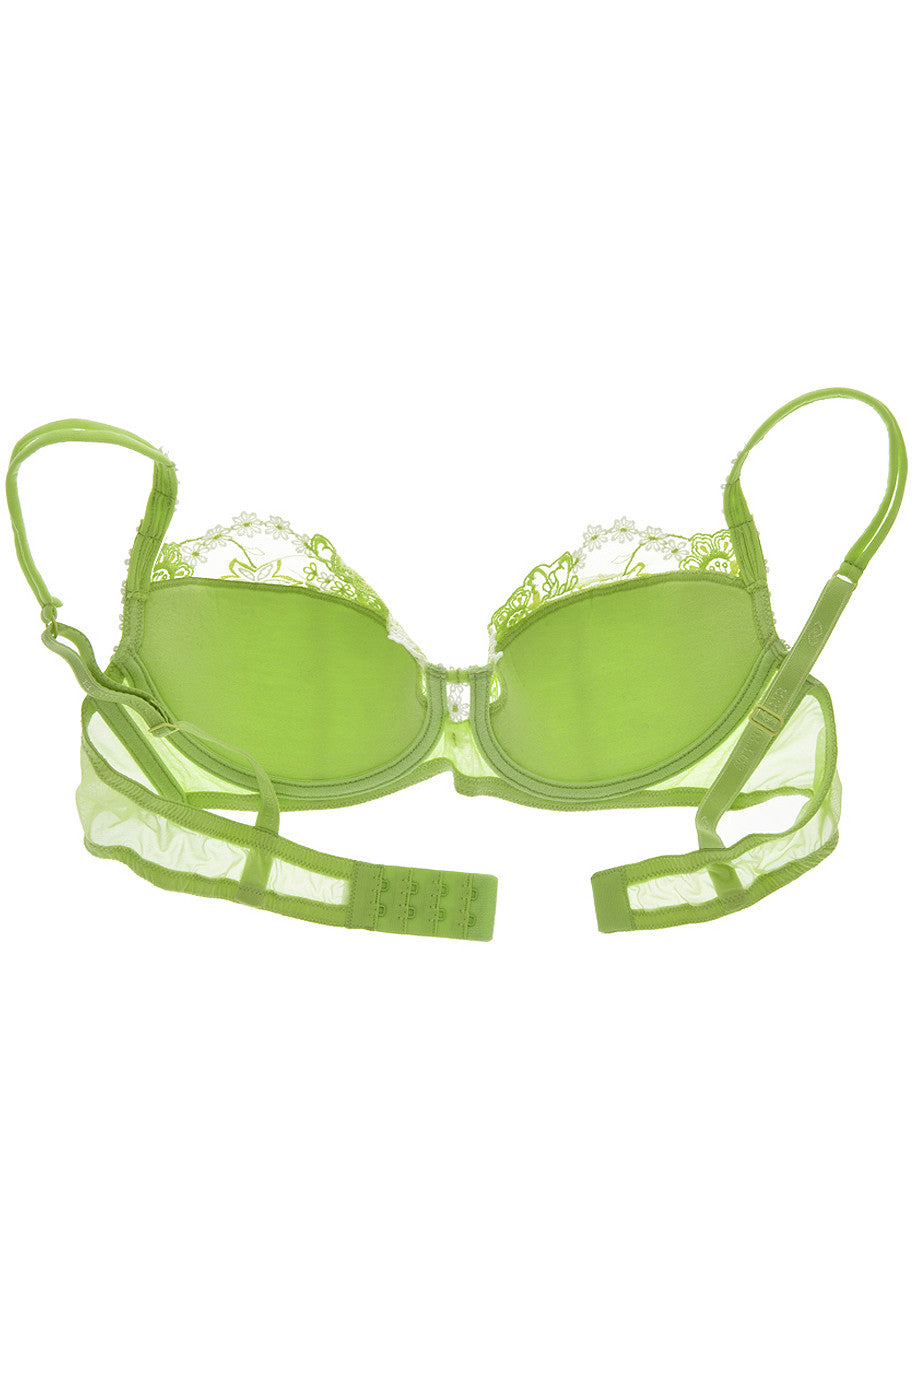 Buy online Green Nylon Balconette Bra from lingerie for Women by Susie for  ₹499 at 38% off